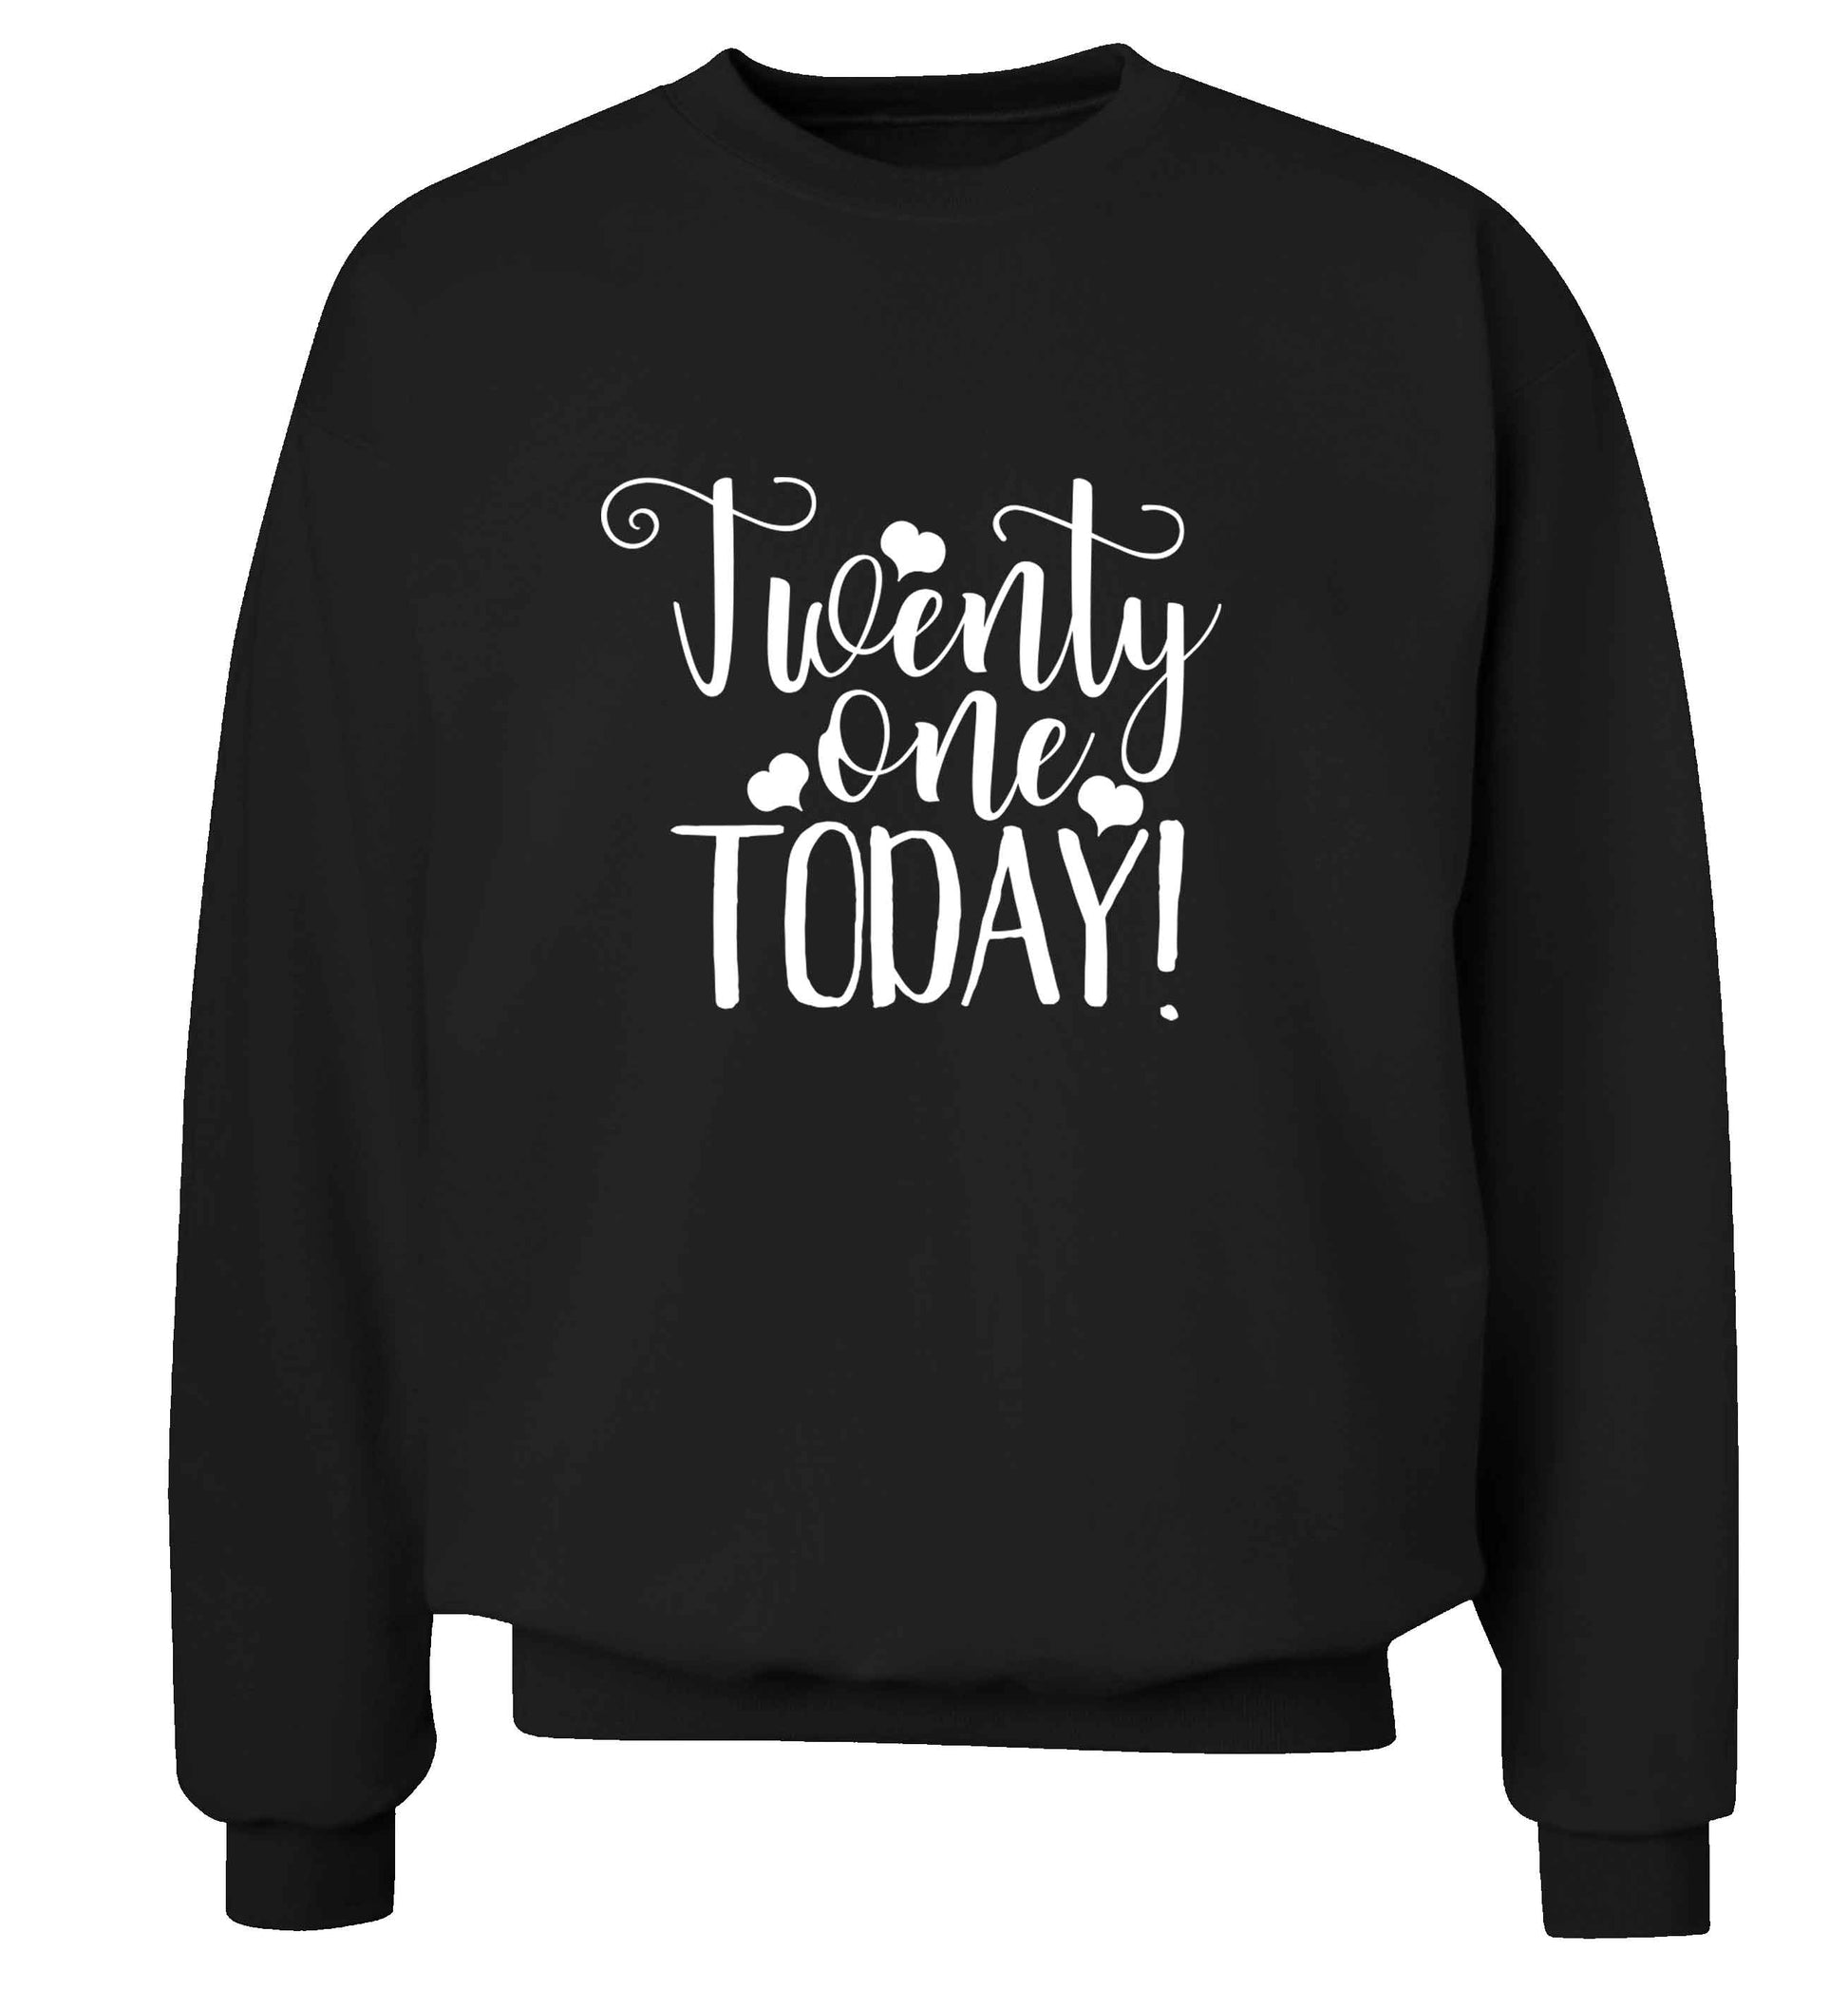 Twenty one today!adult's unisex black sweater 2XL